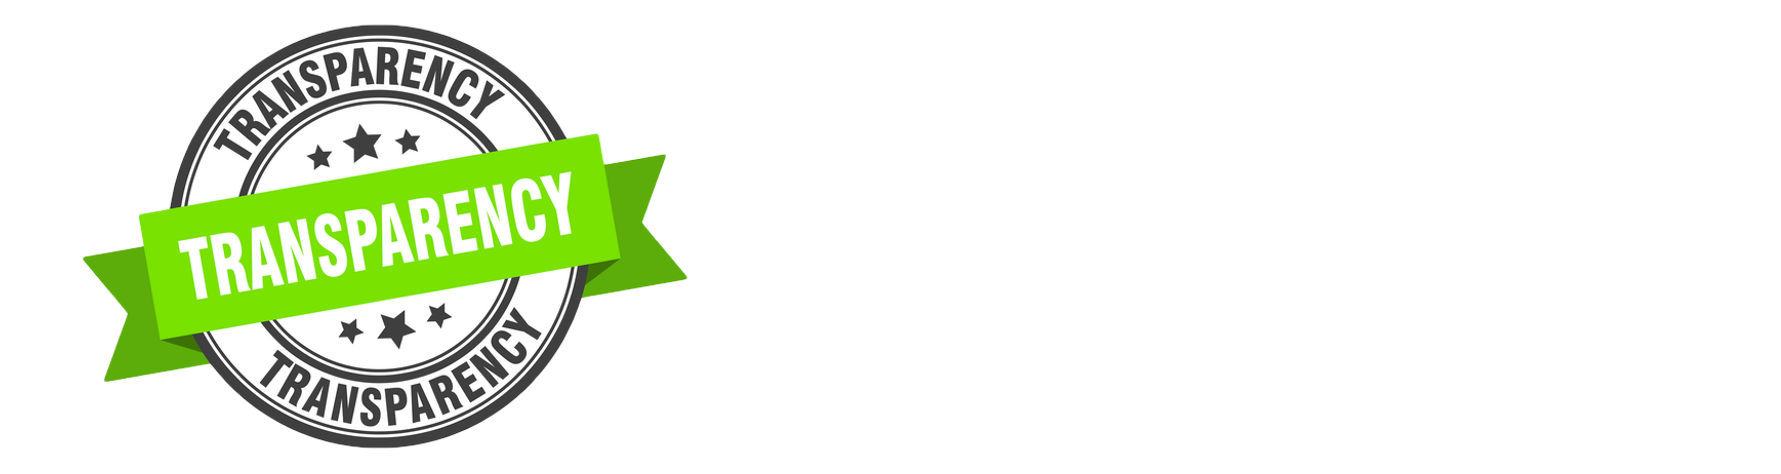 ad_free